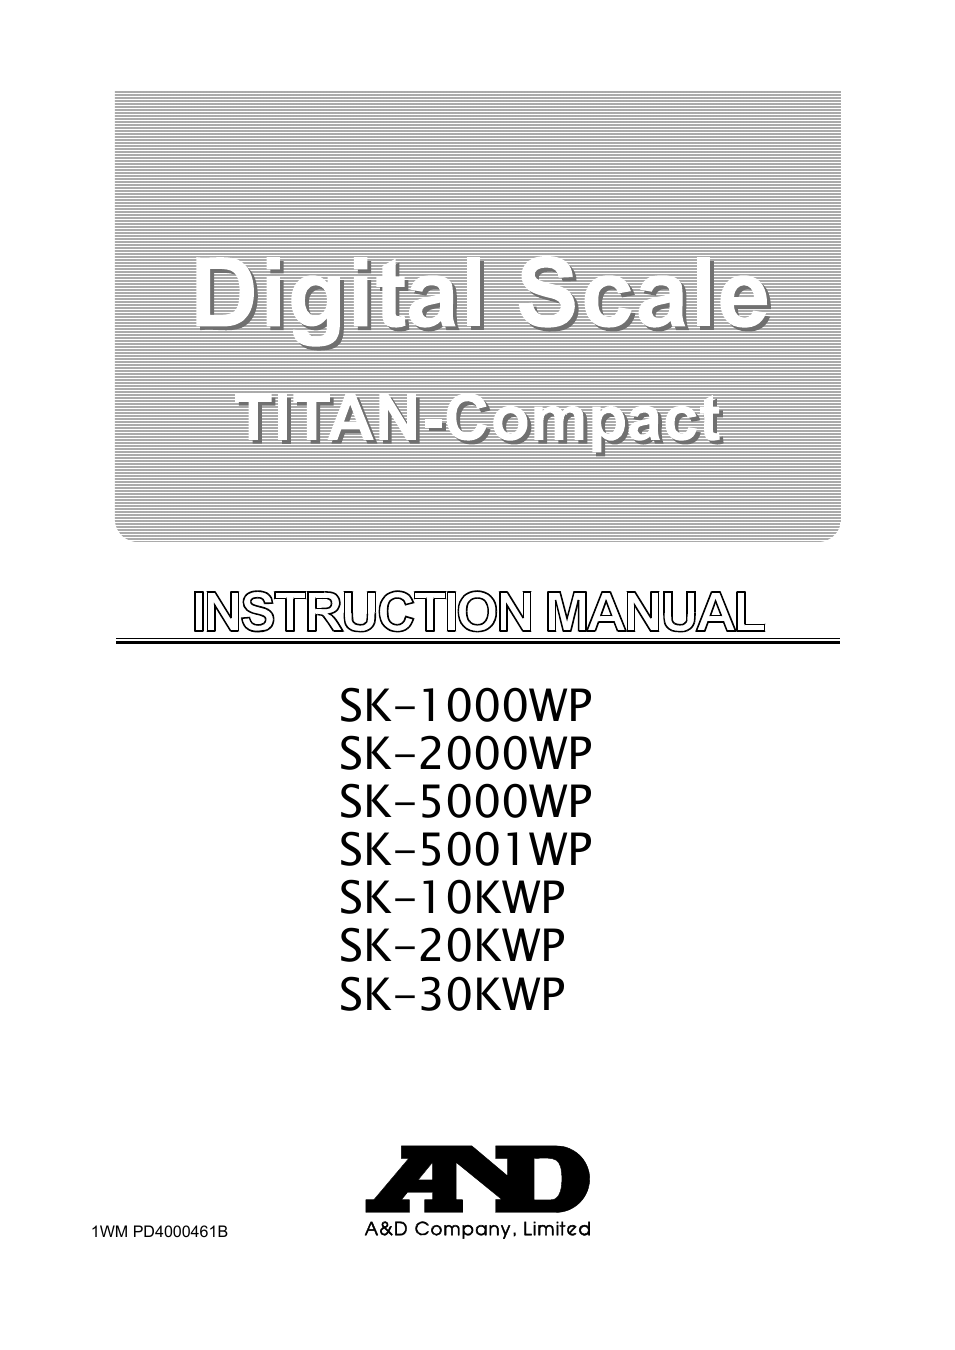 Digital Scale SK-1000WP